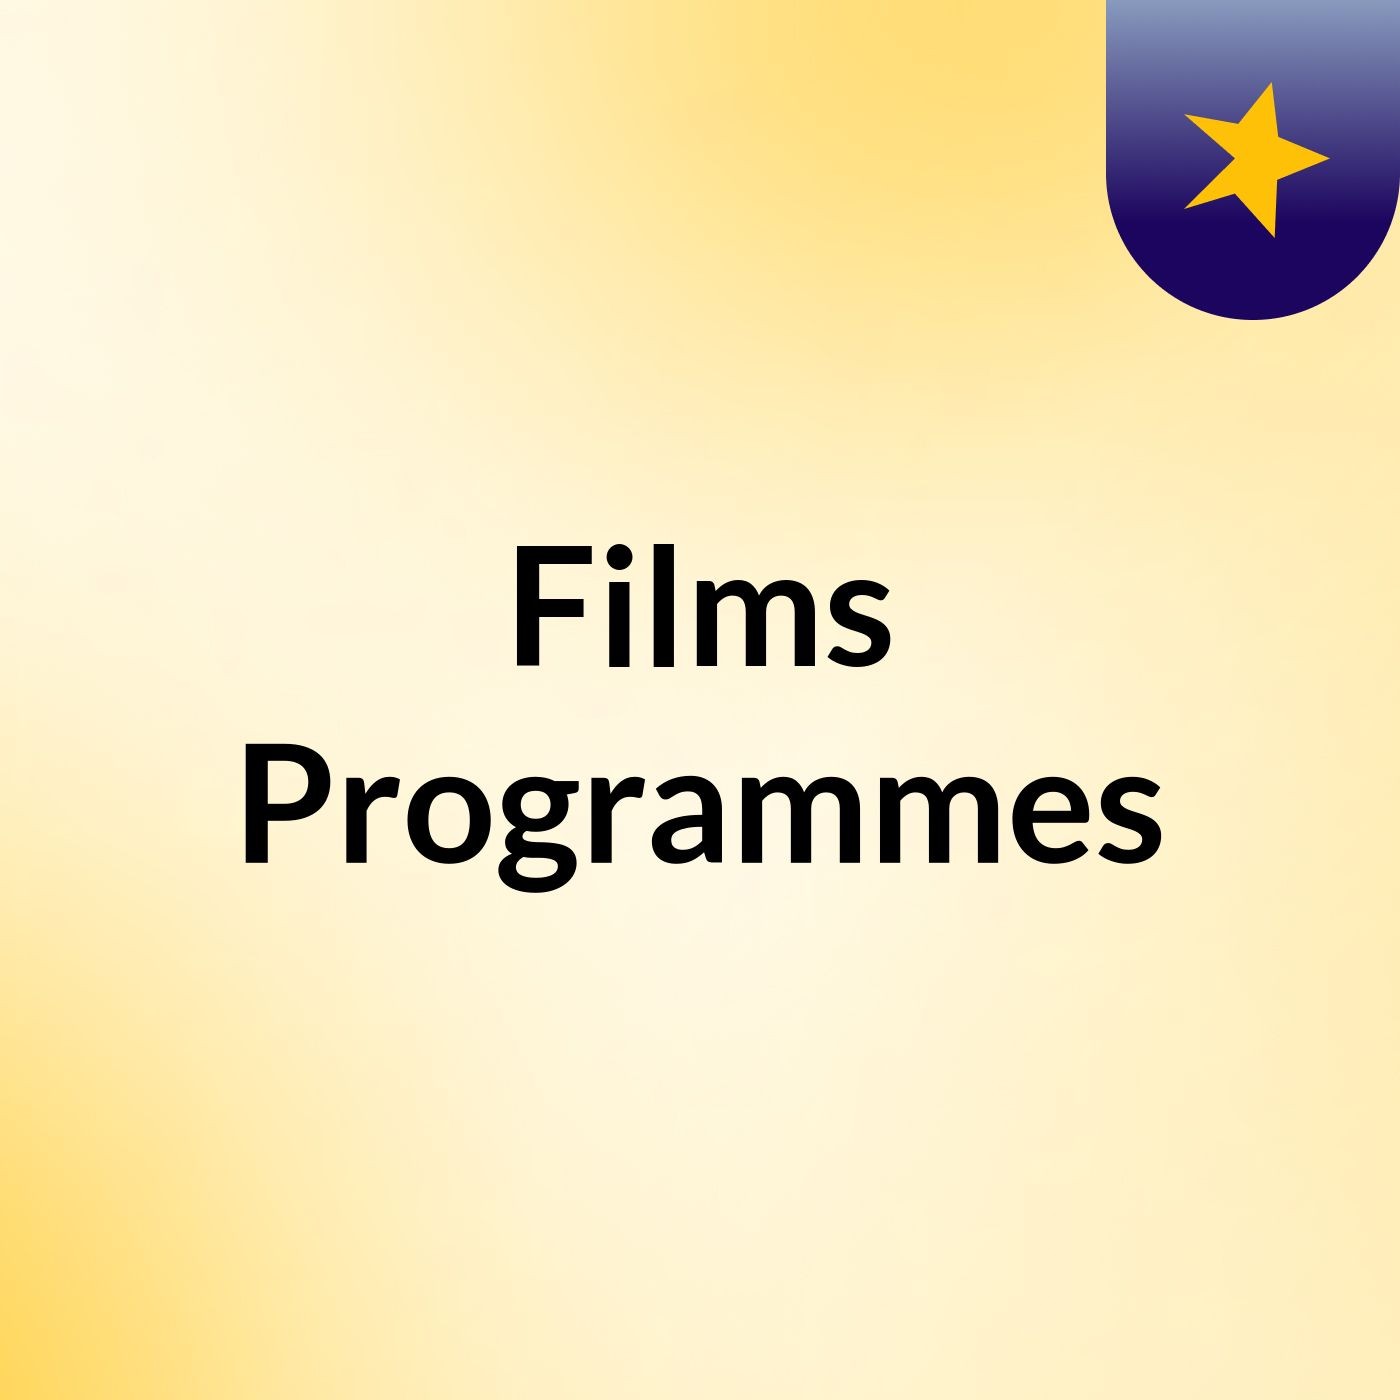 Films Programmes